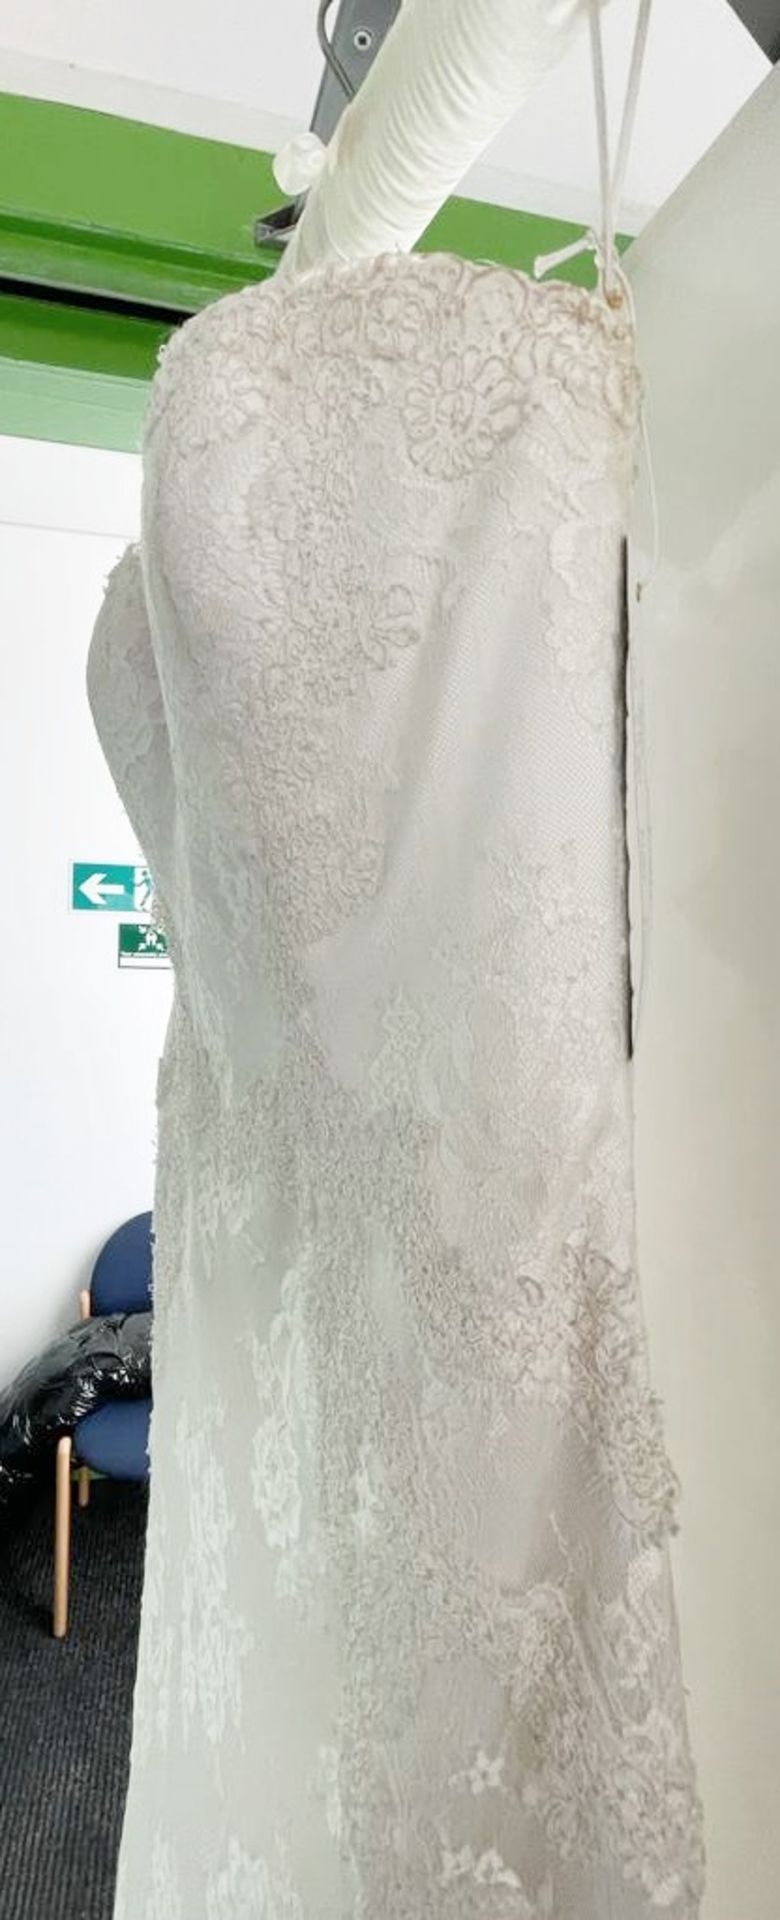 1 x ANNASUL Y 'Snow' Designer Wedding Dress Bridal Gown - Size: UK 12 - Original RRP £1,450 - Image 7 of 16